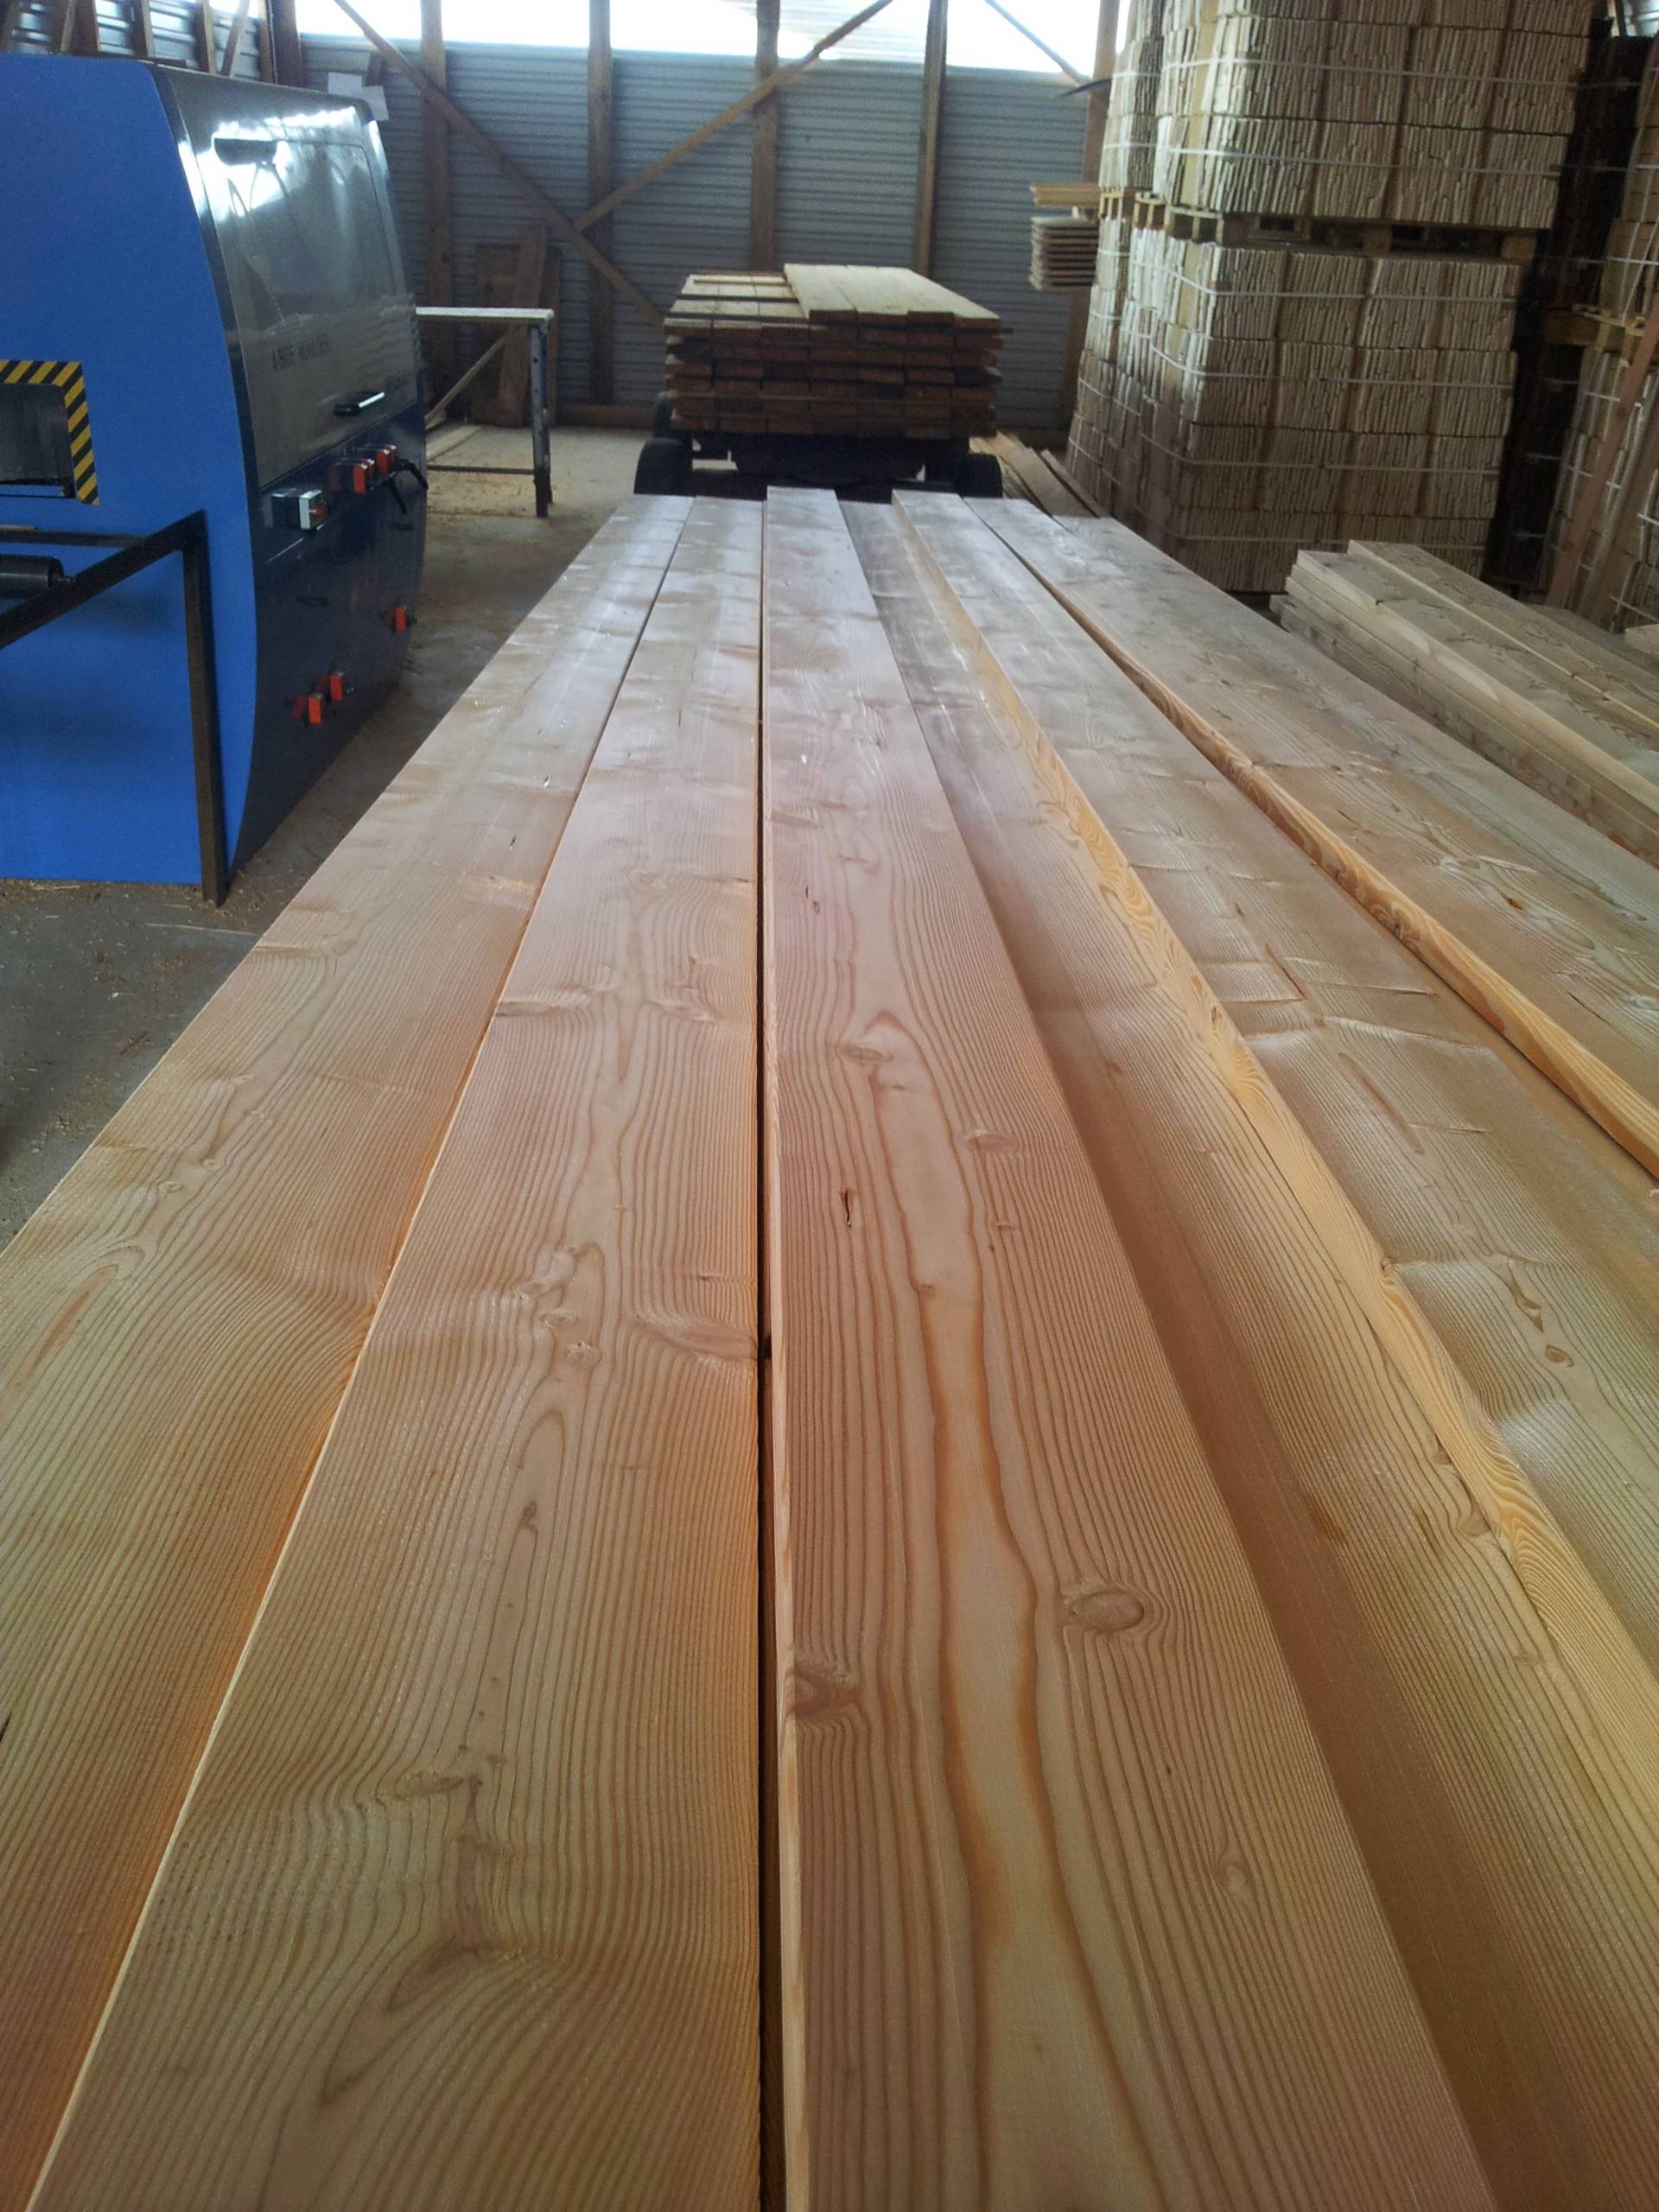 Siberian Larch Decking 145 x 21mmTimberHardwood Deck BoardsLengths 